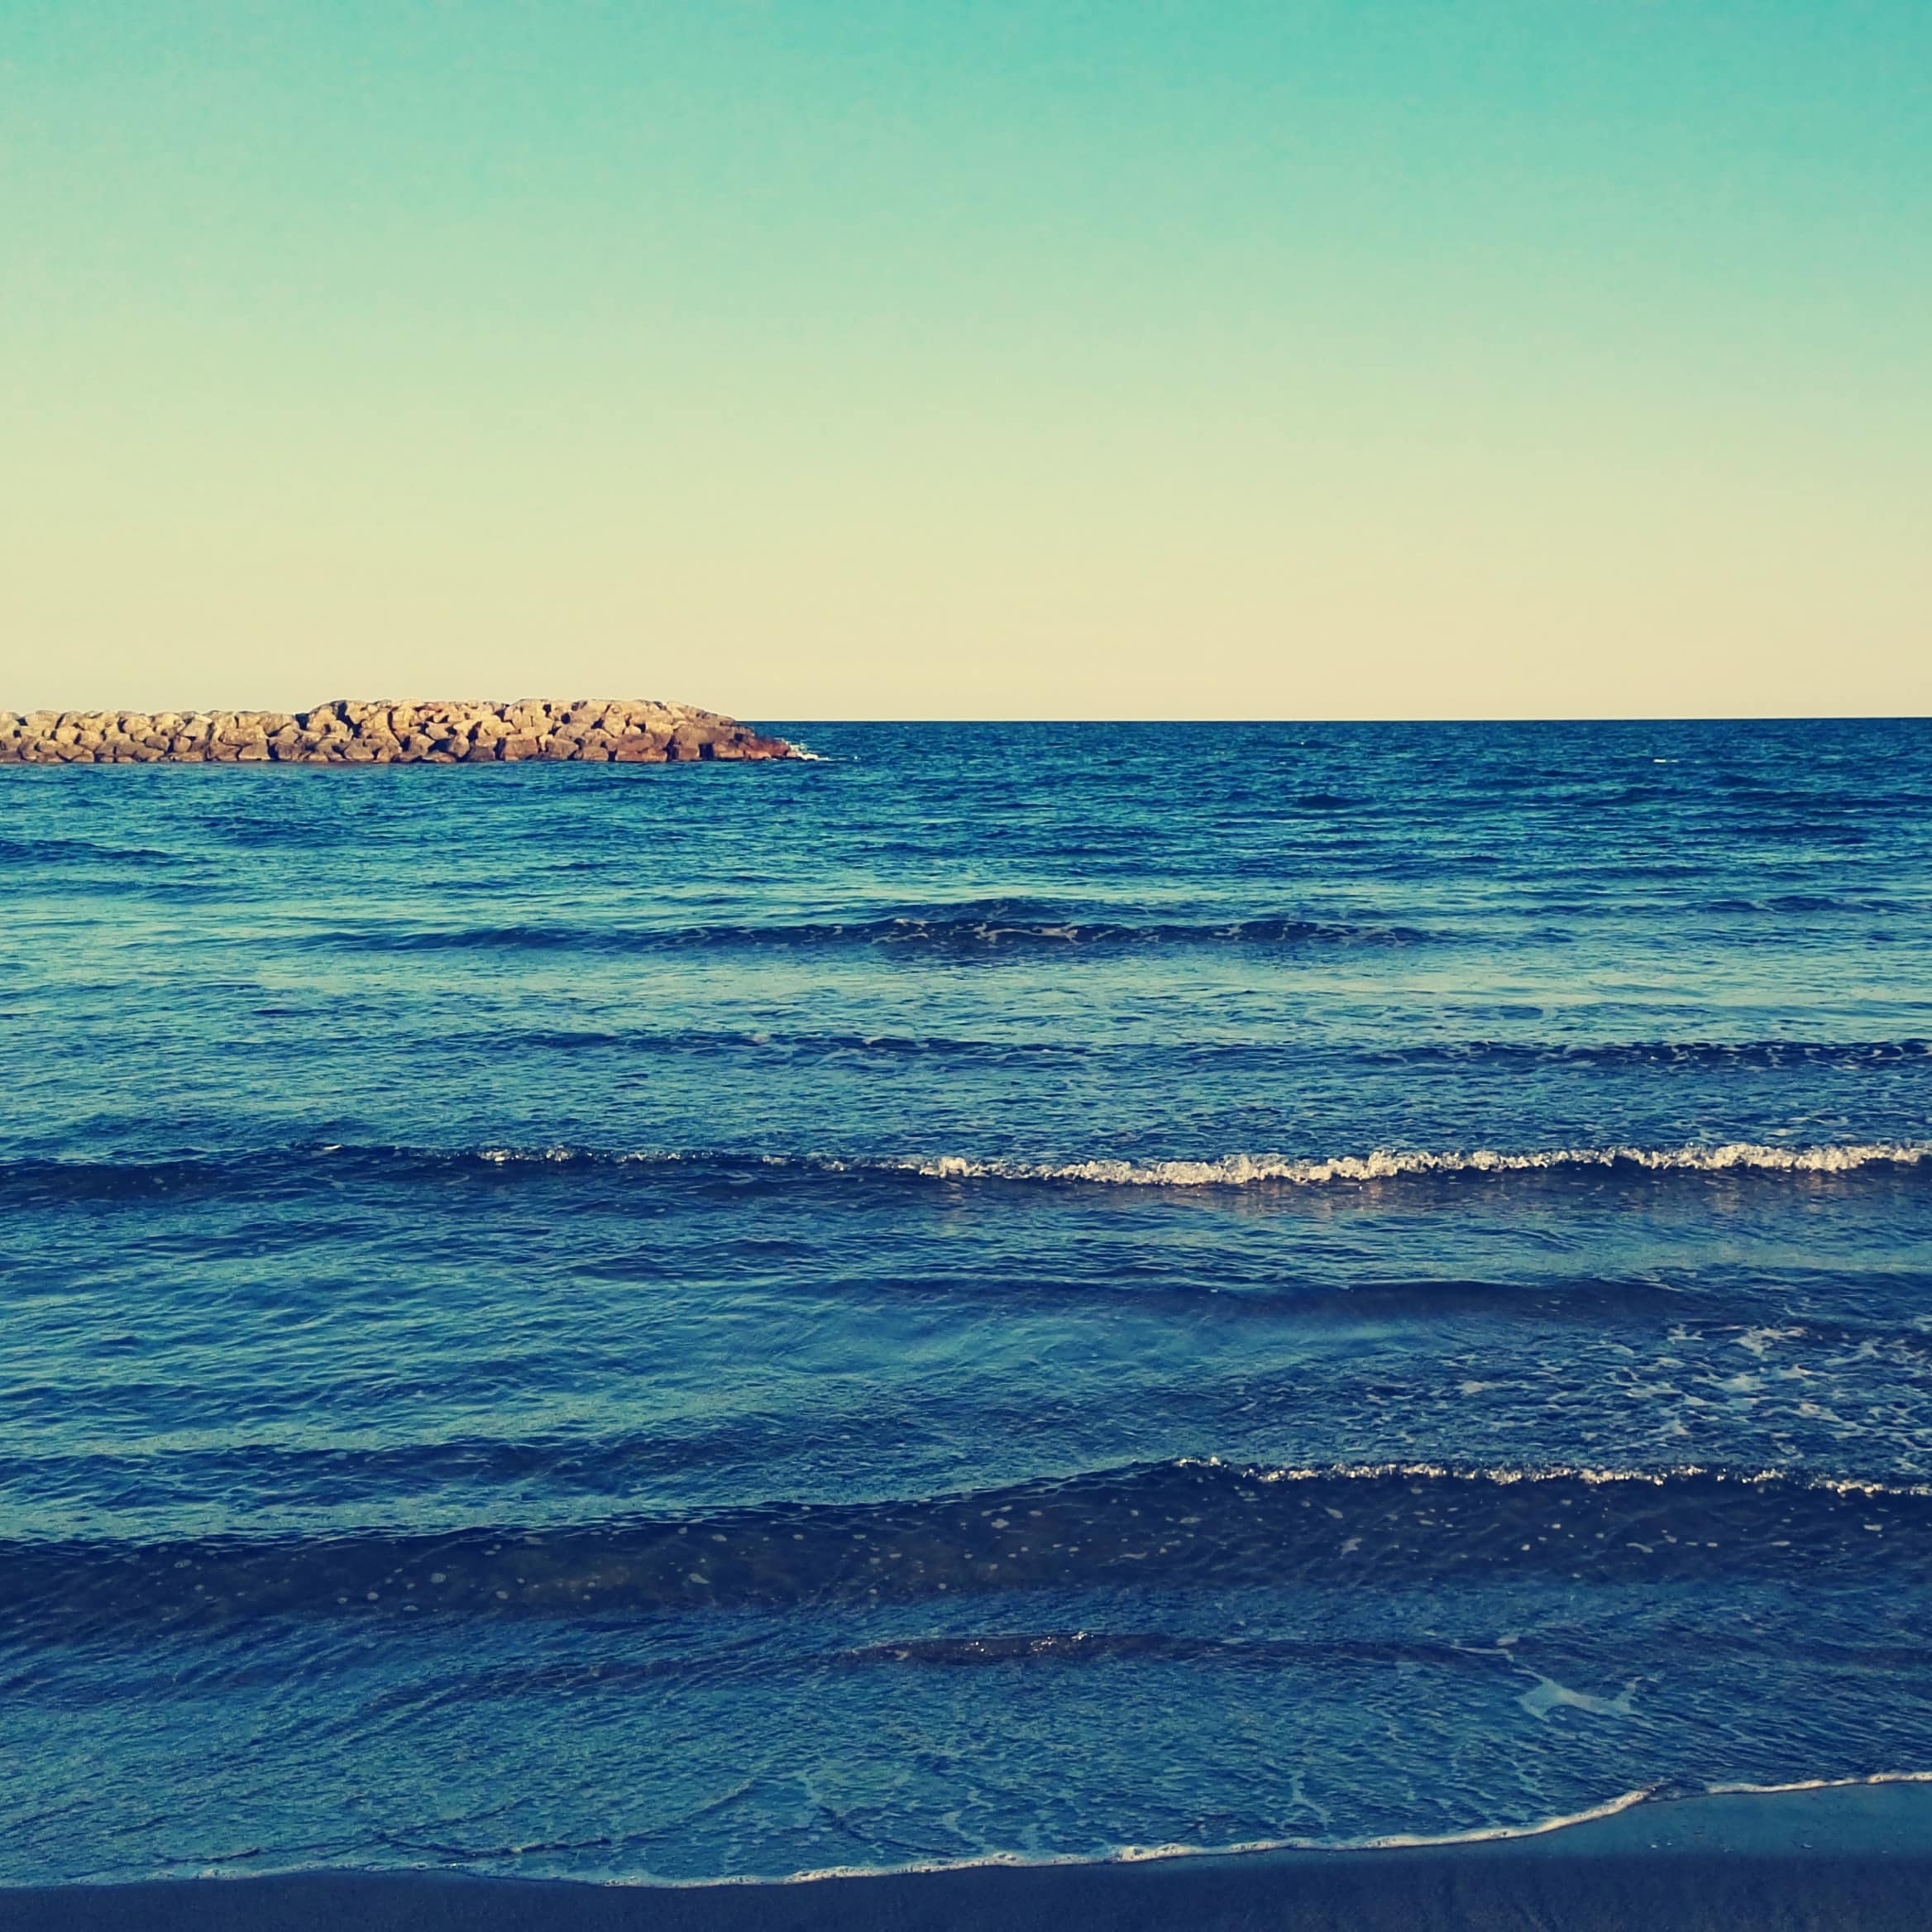 Mer, ciel bleu, location vacances bord de mer méditerranée